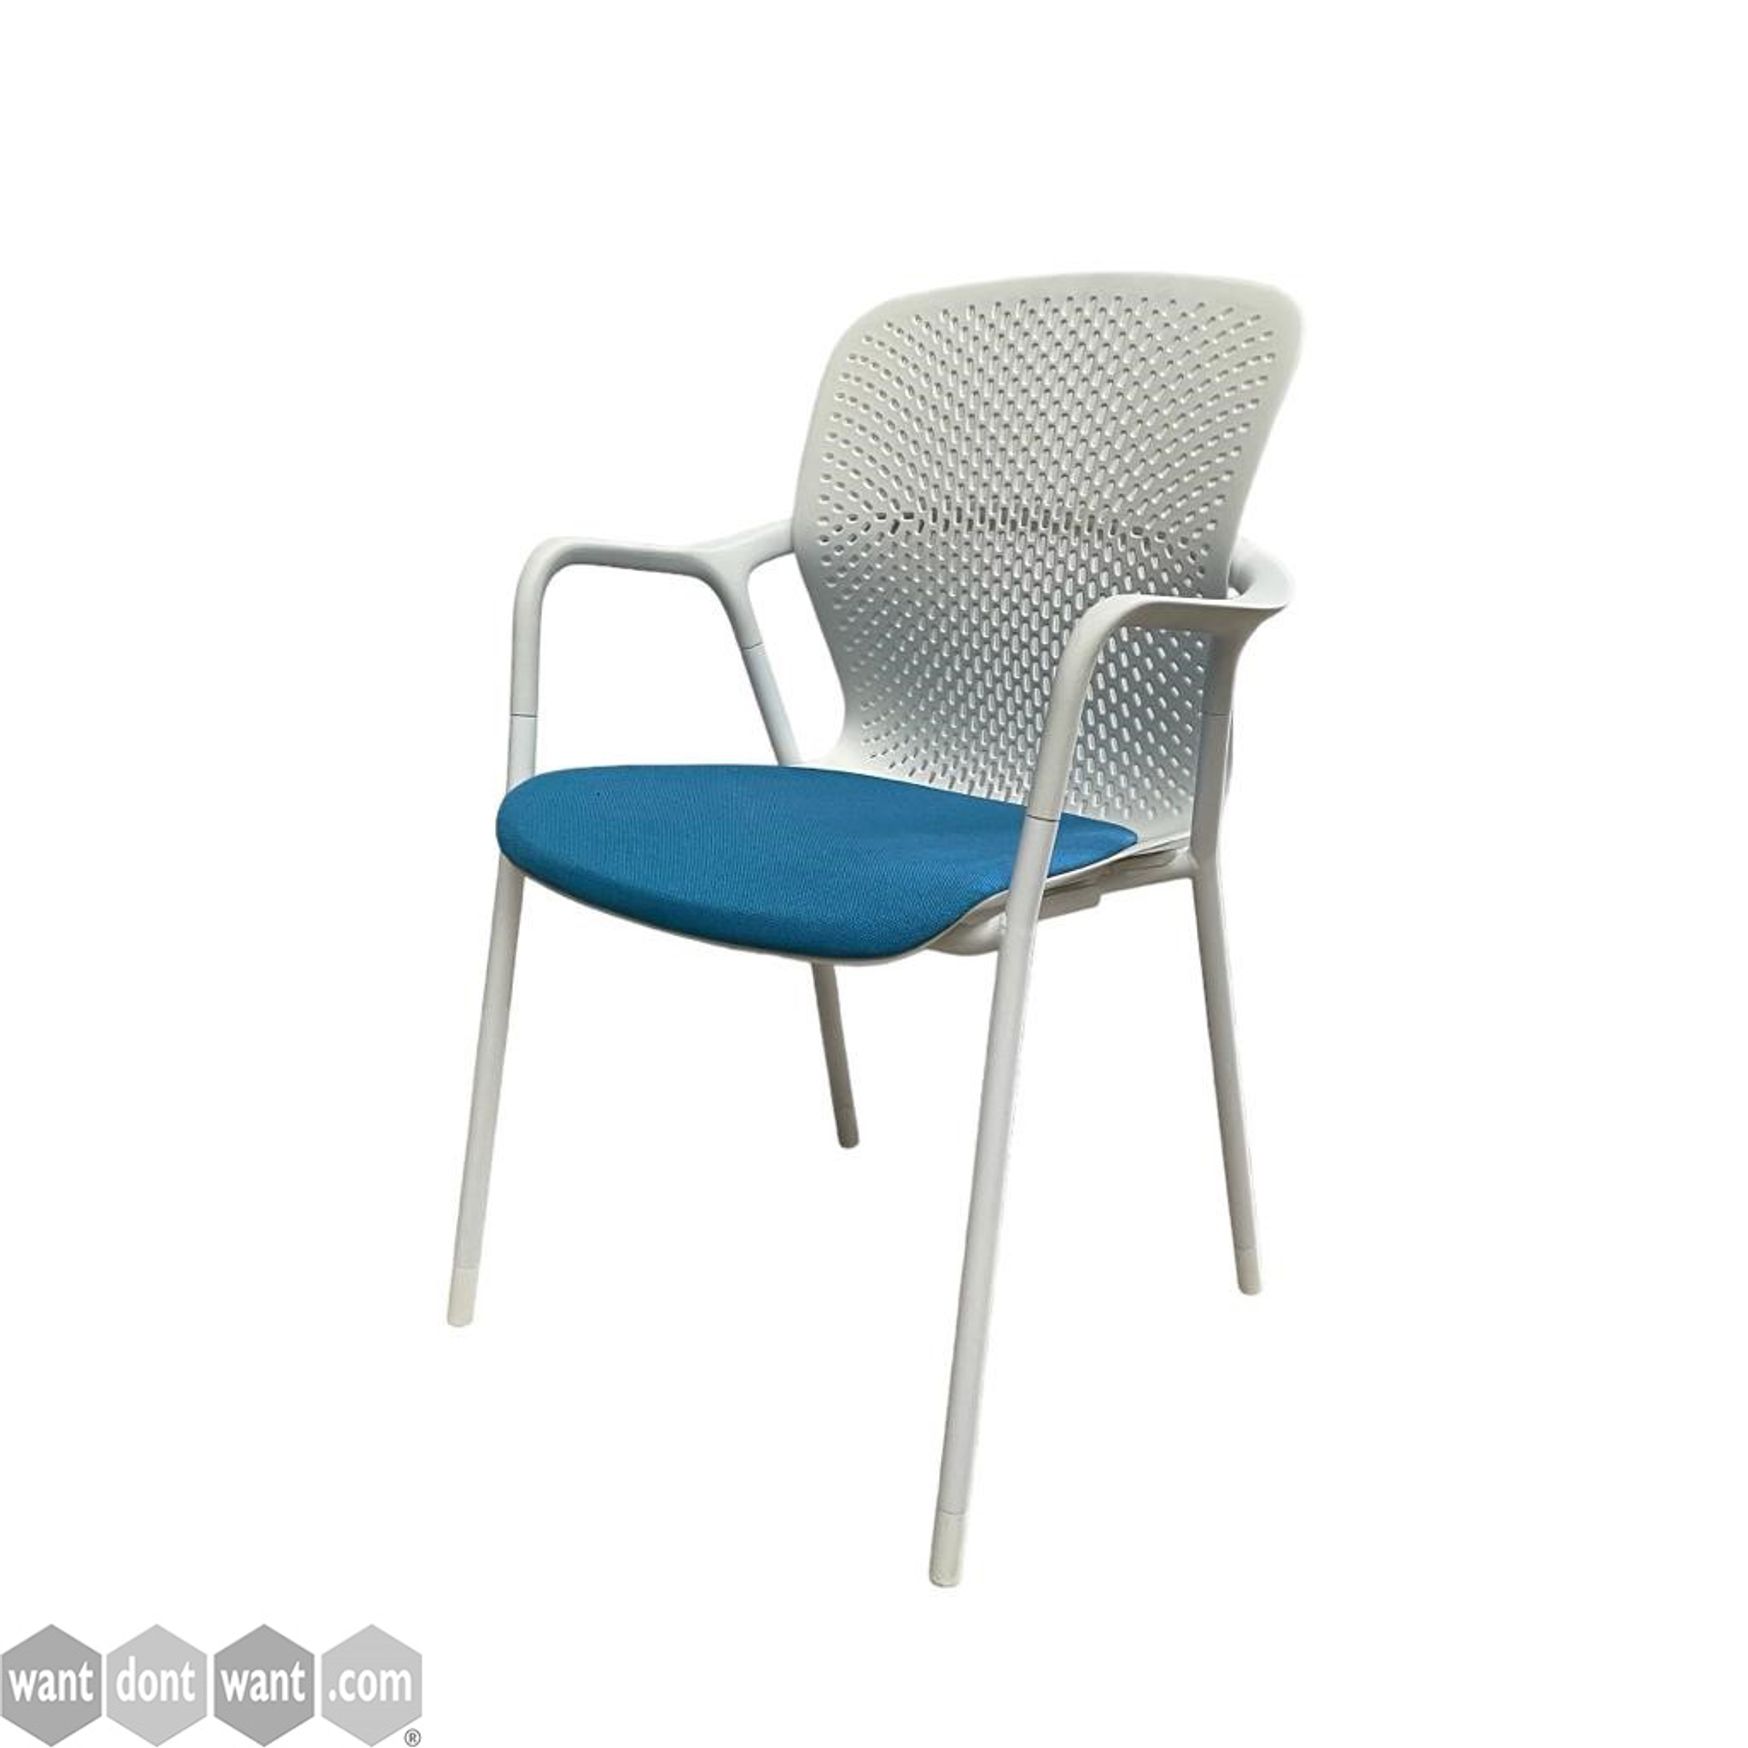 Herman Miller 'Keyn' stacking chair with blue seat.